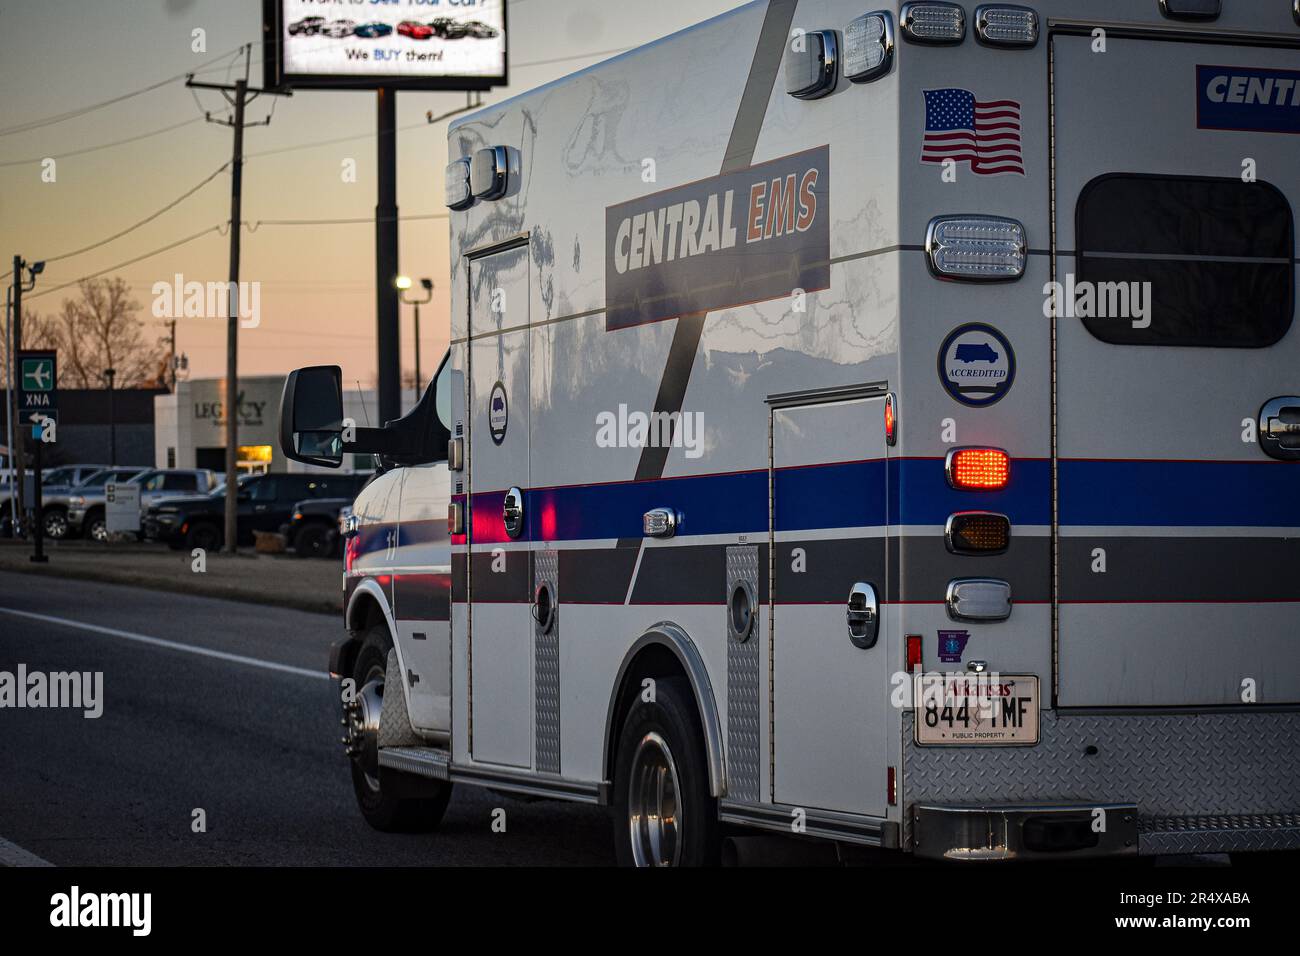 Ford E-Series Ambulance - Central EMS - Fayetteville Arkansas Stock Photo